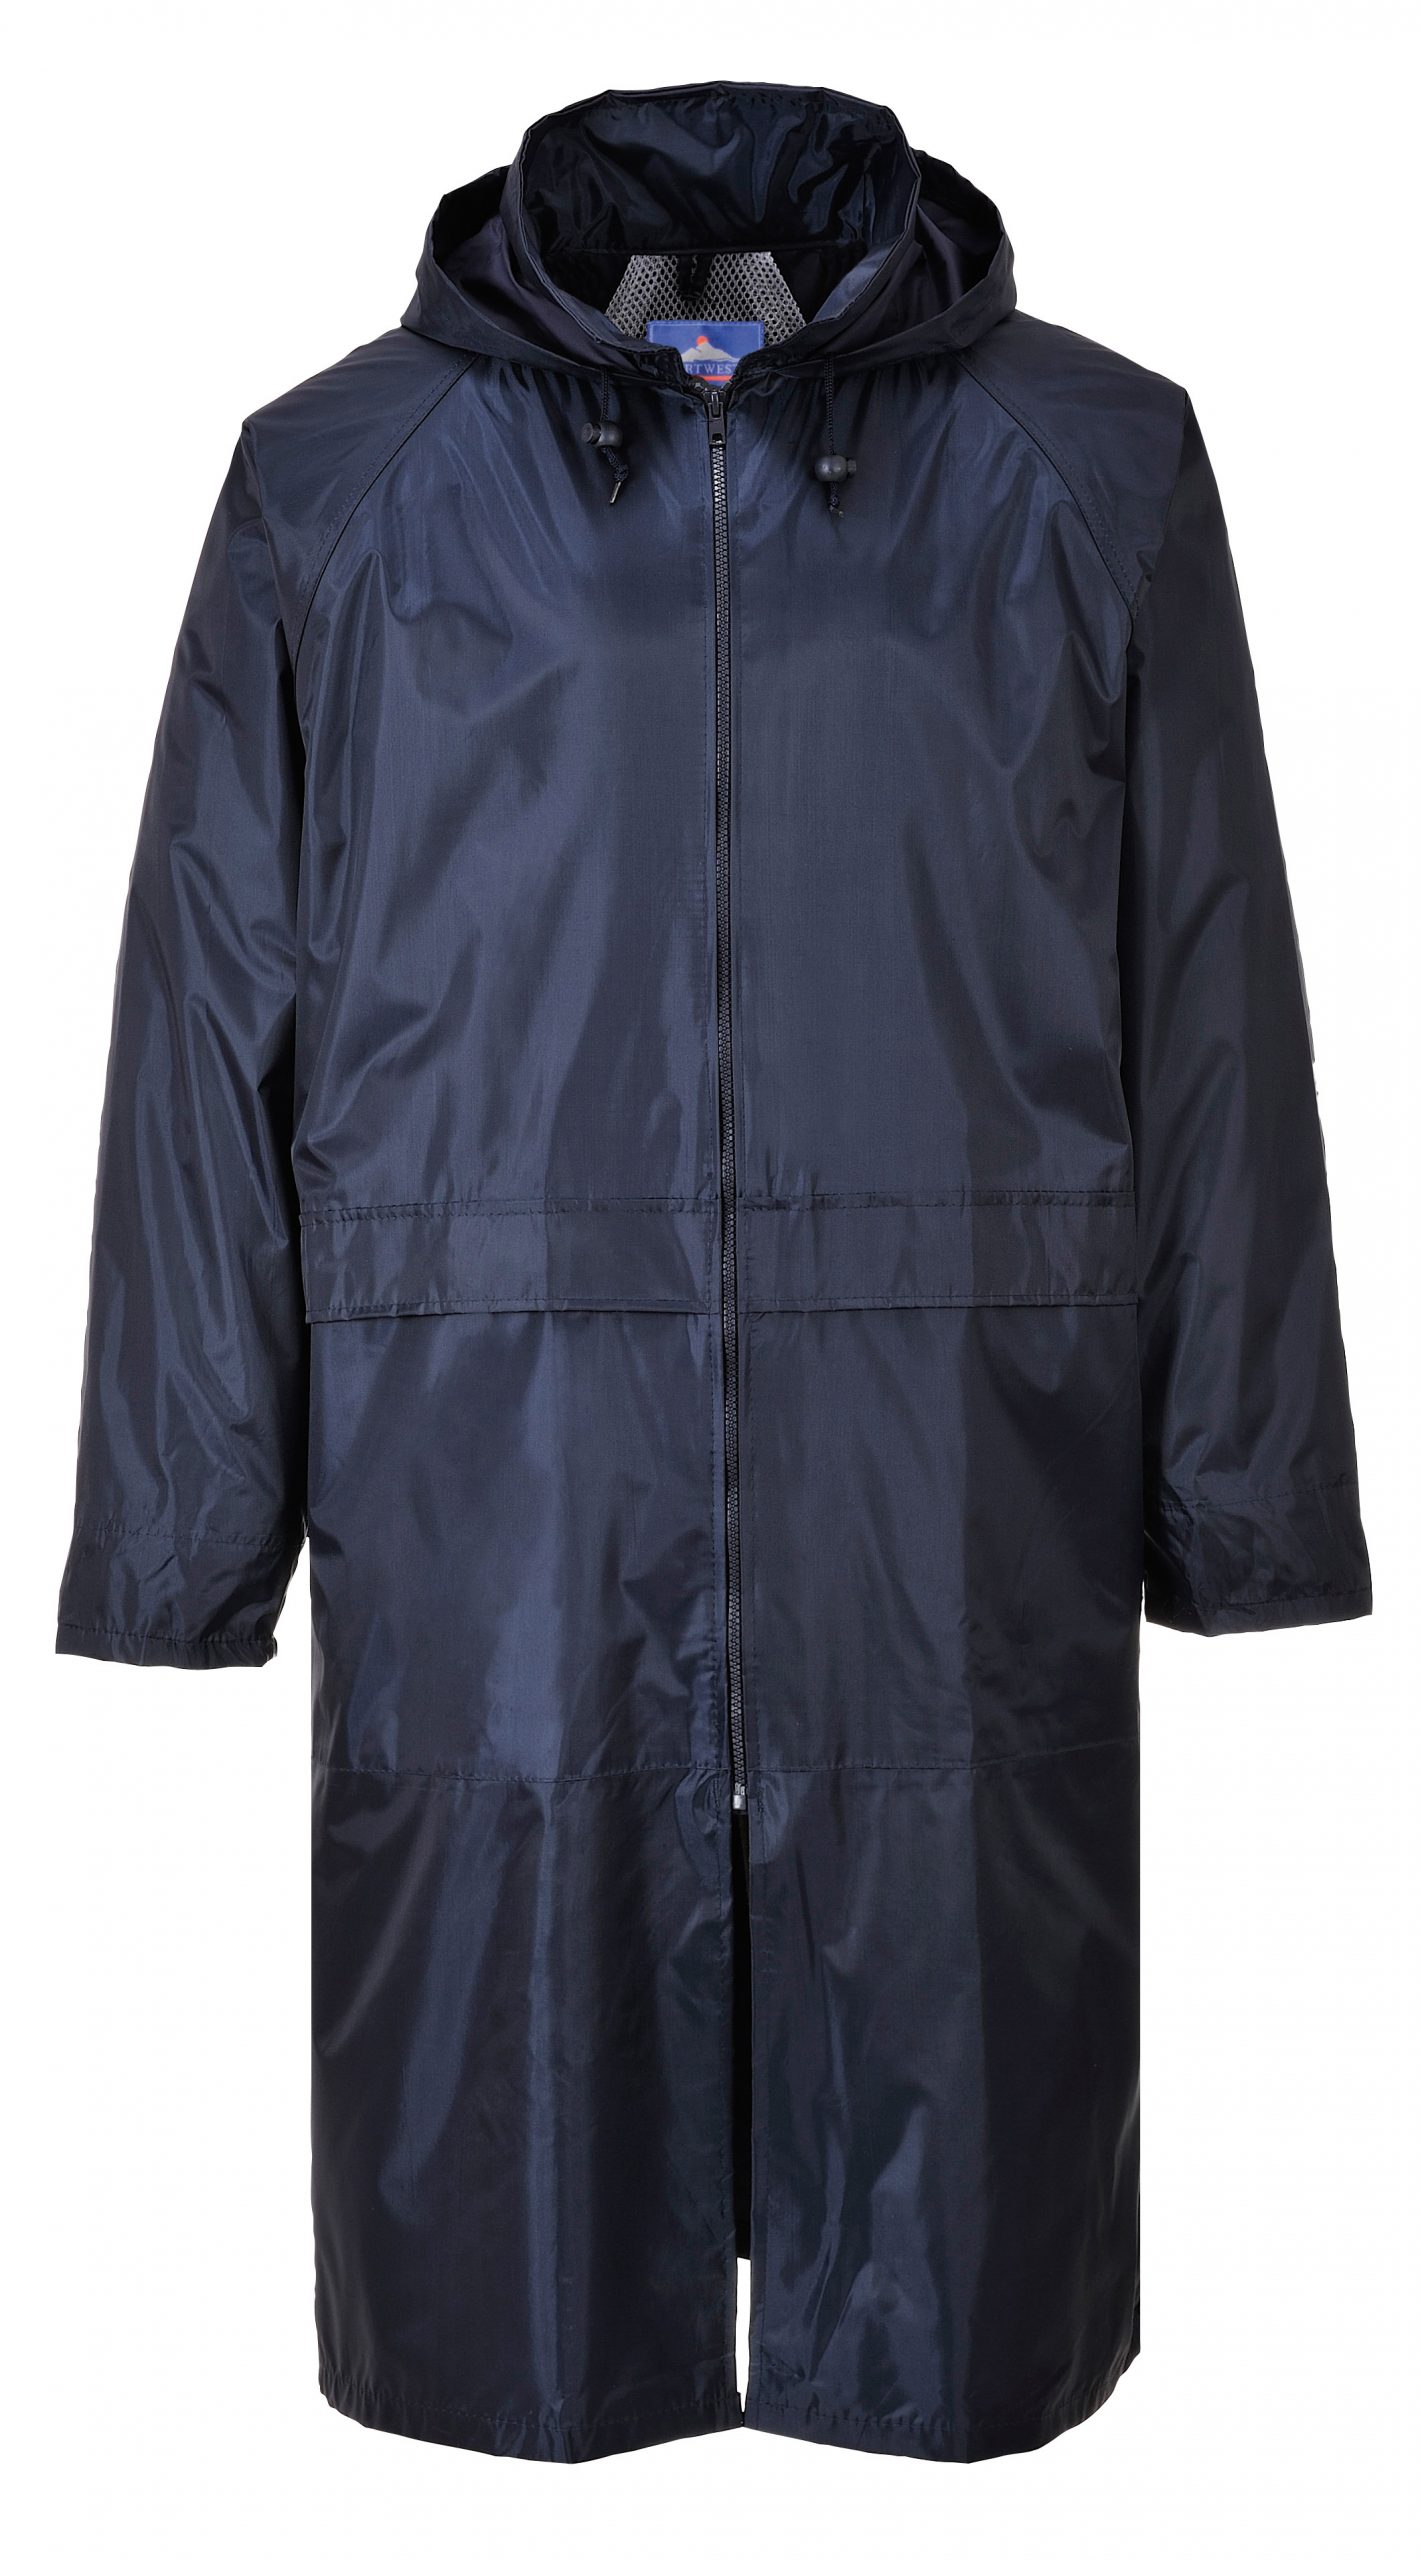 Fabric Navy Portwest S438NARXXL Classic Rain Coat Xx-Large 